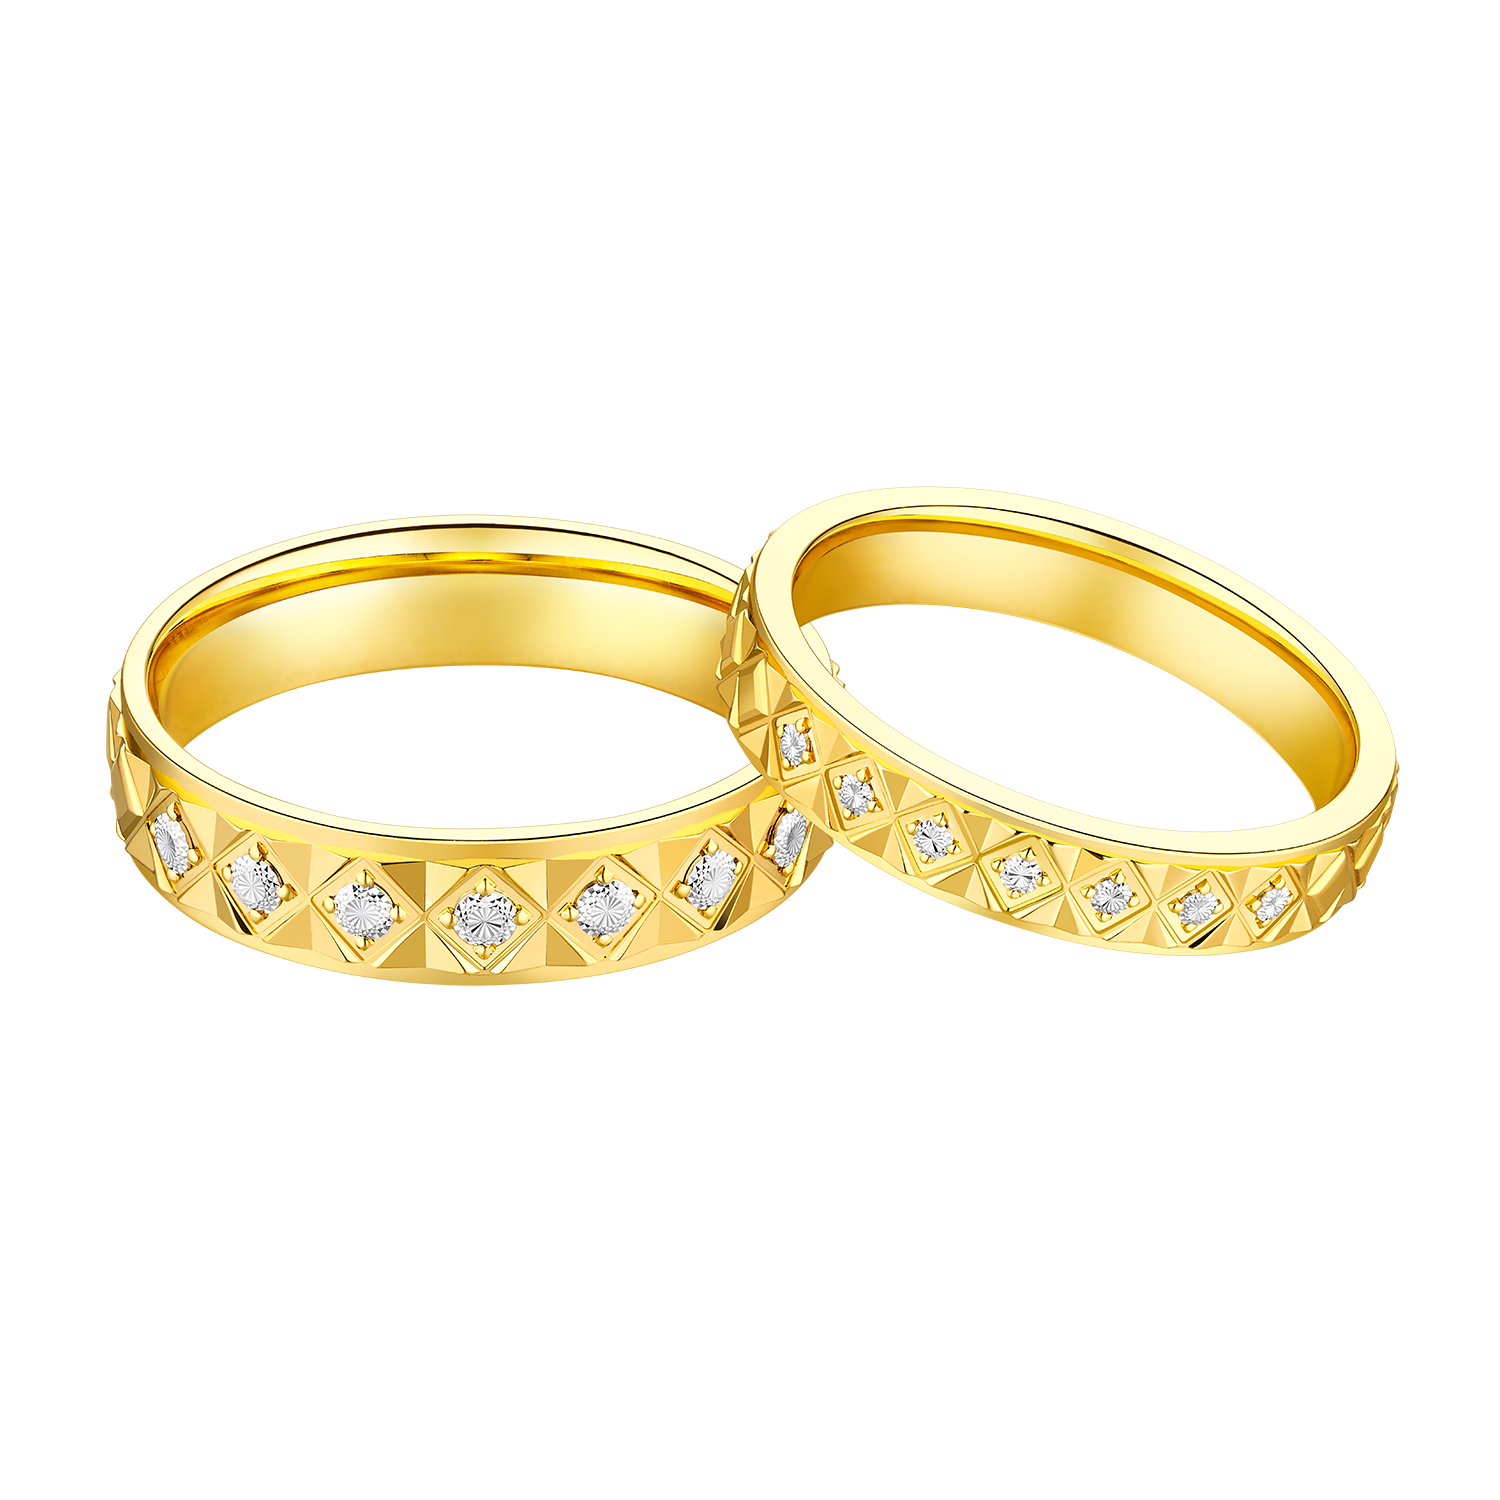 Buy quality Gold Designer culcutti Ladies Ring in Ahmedabad